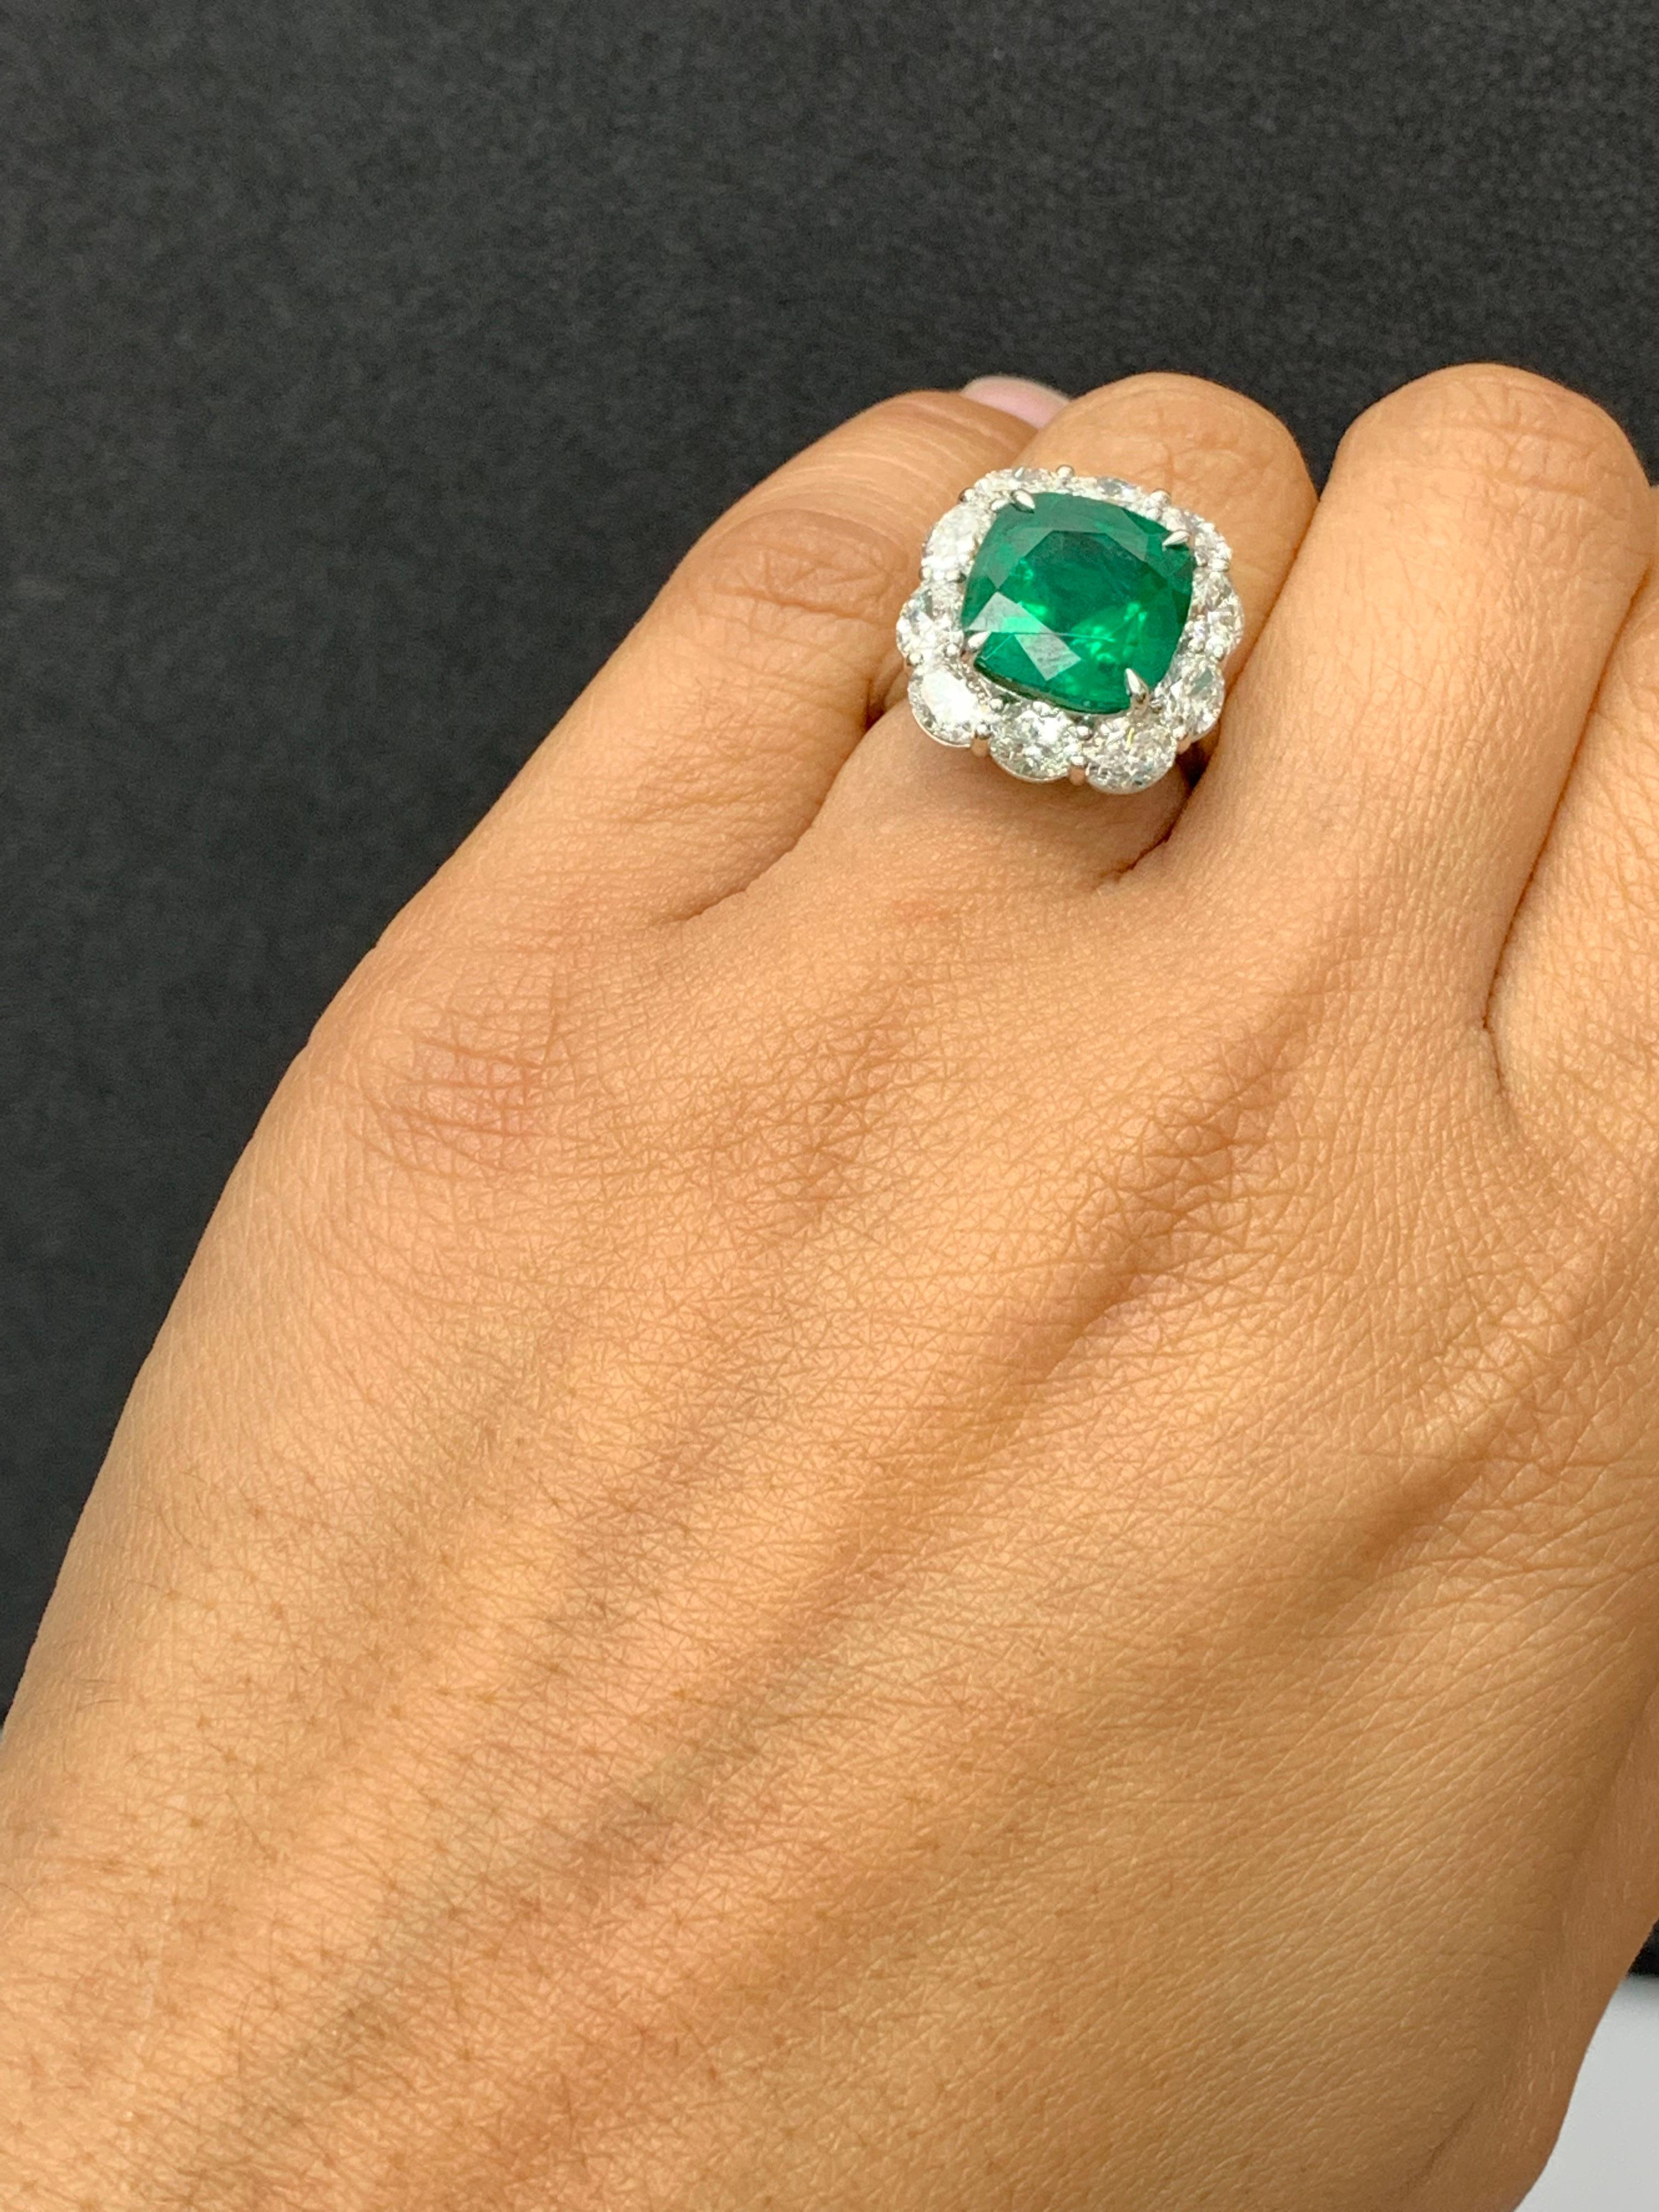 Certified 6.58 Carat Cushion Cut Emerald Diamond Ring in Platinum For Sale 1